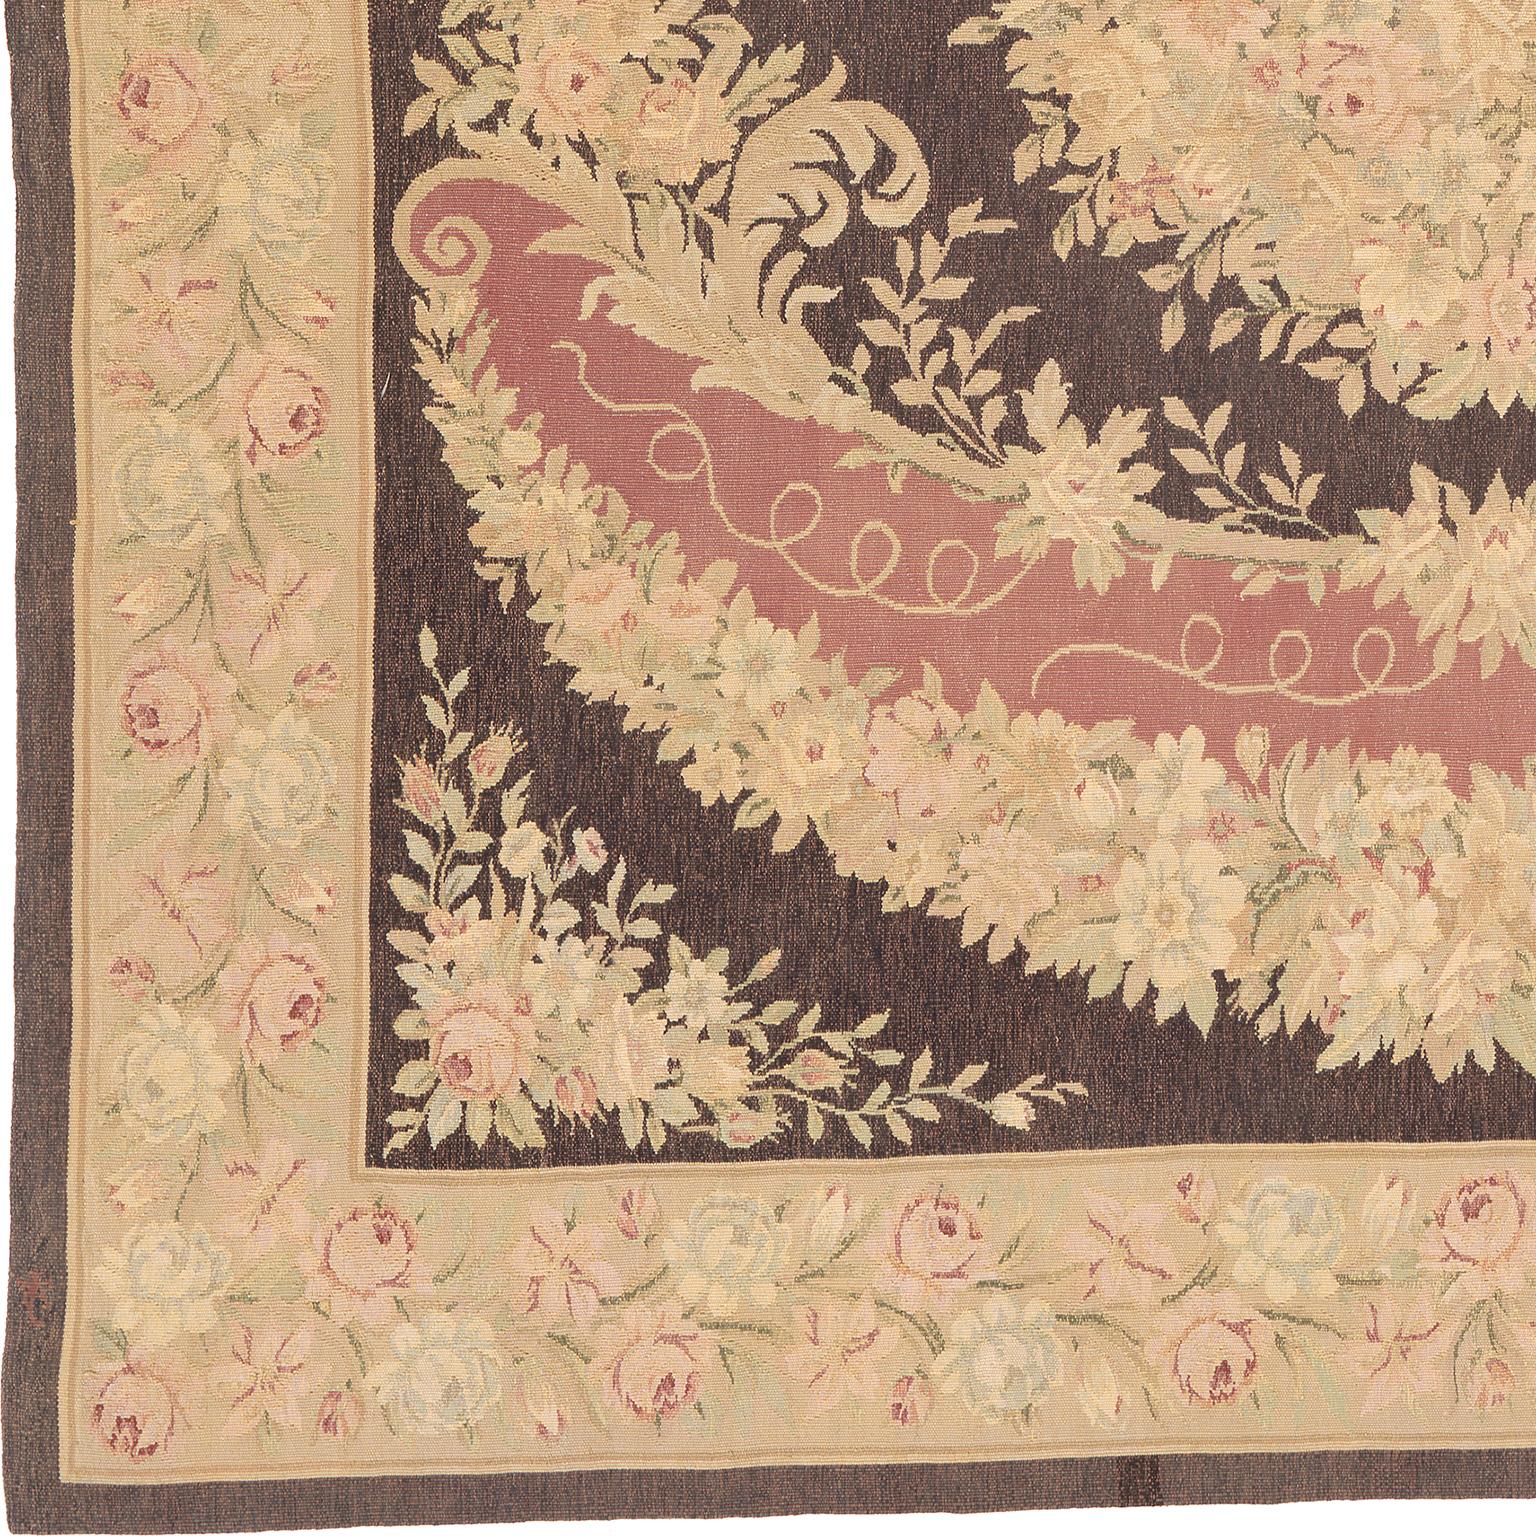 French Aubusson carpet.
France, circa 1920.
Handwoven.